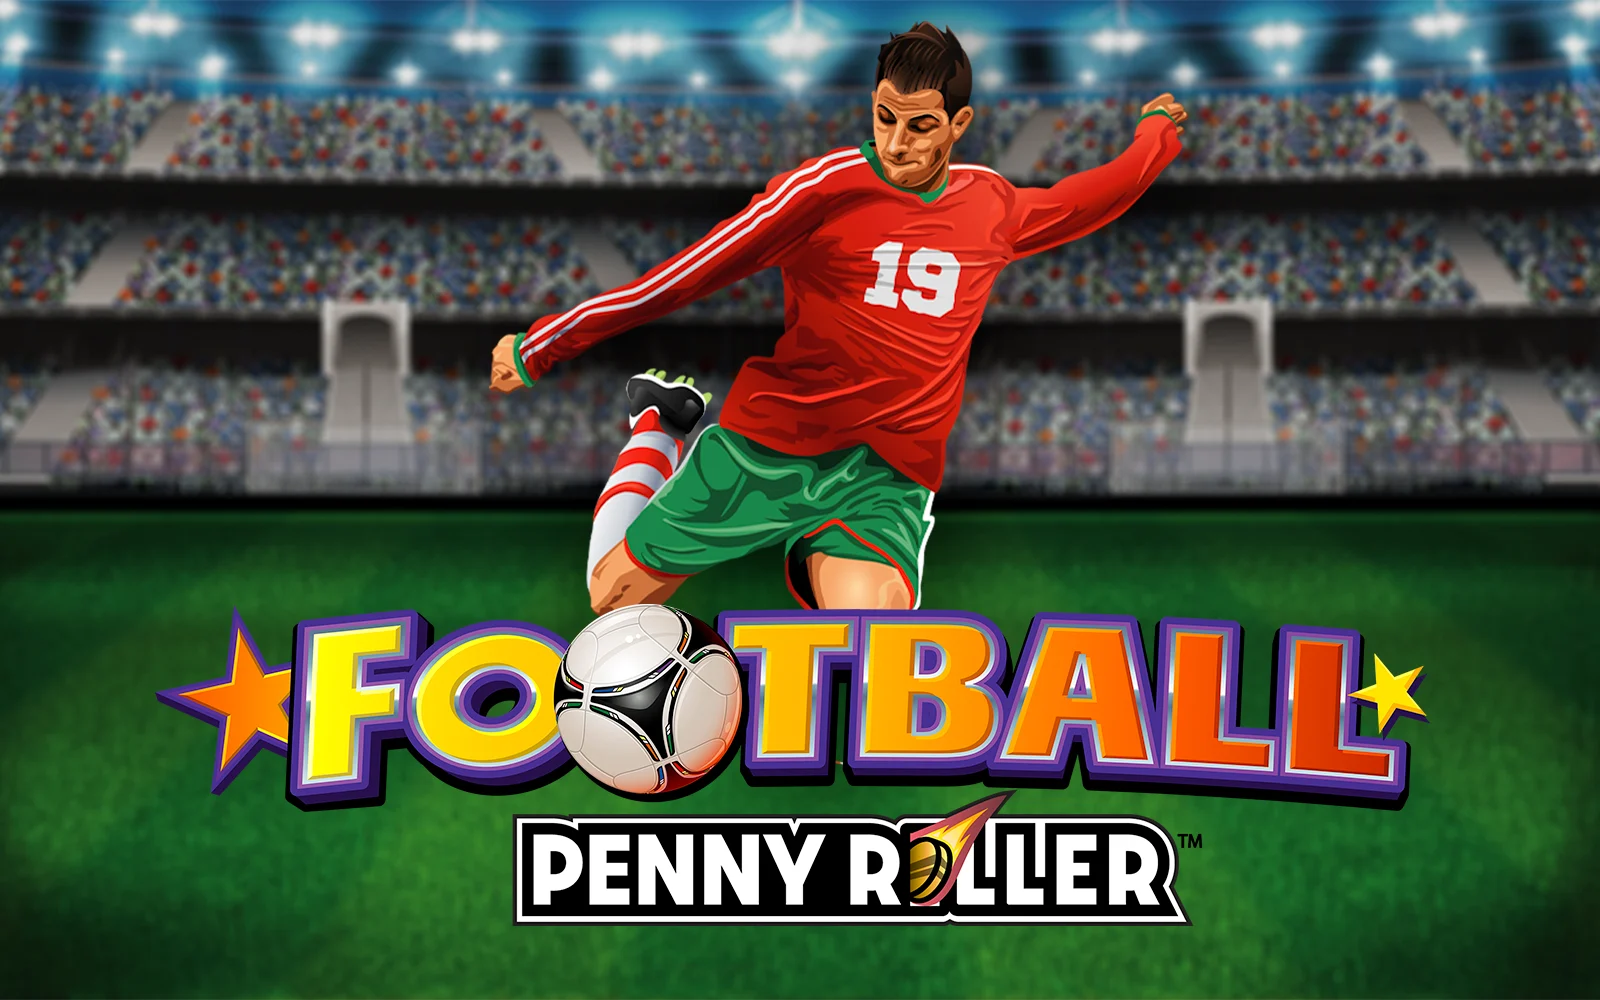 Грайте у Football Penny Roller™ в онлайн-казино Starcasino.be